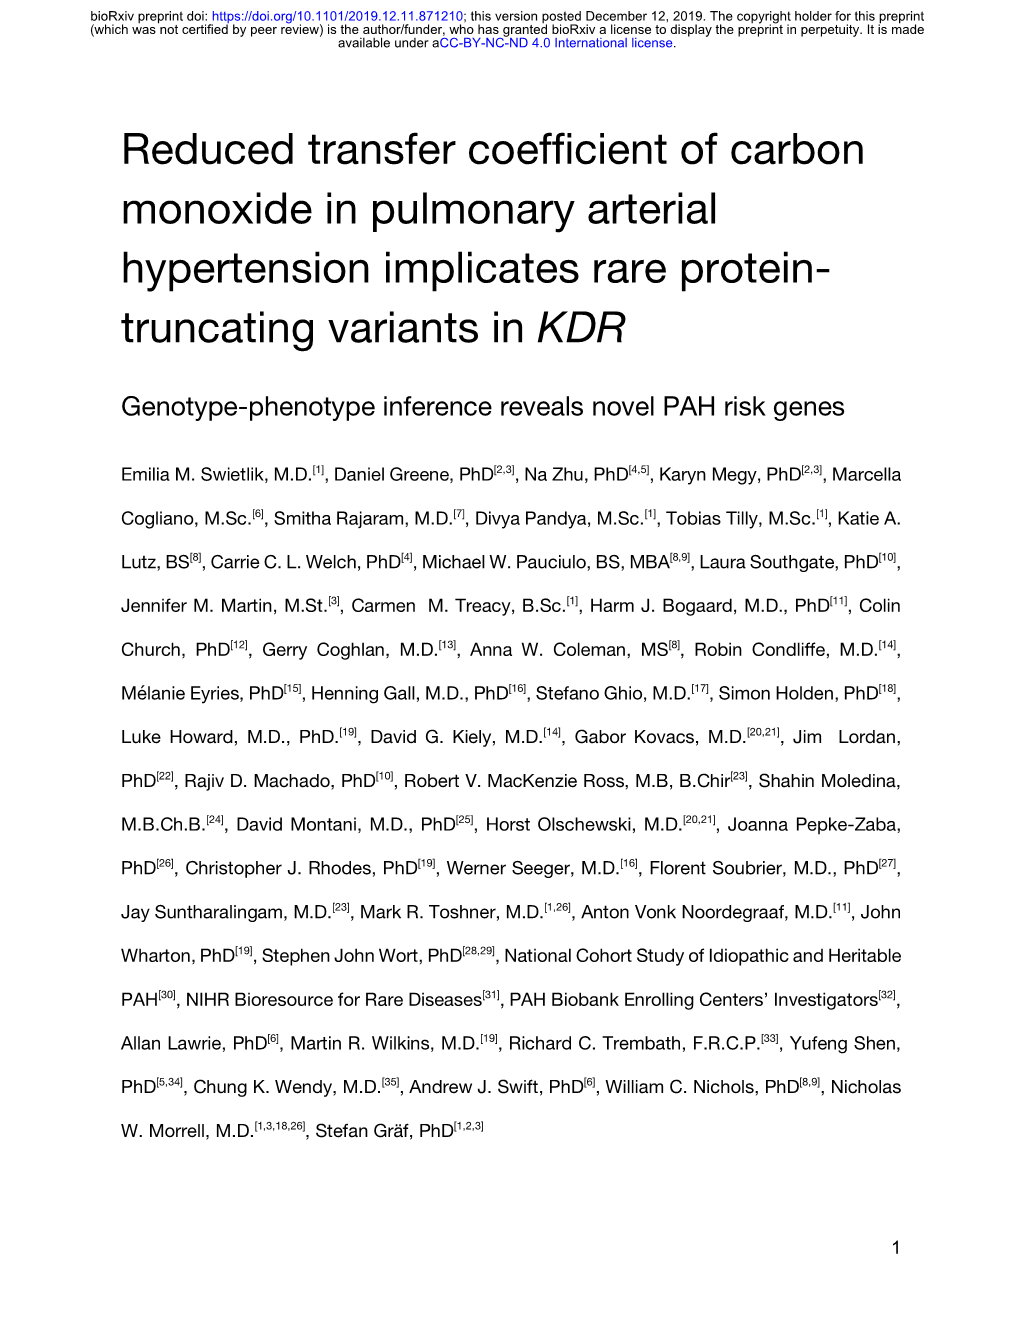 Reduced Transfer Coefficient of Carbon Monoxide in Pulmonary Arterial Hypertension Implicates Rare Protein-Truncating Variants I